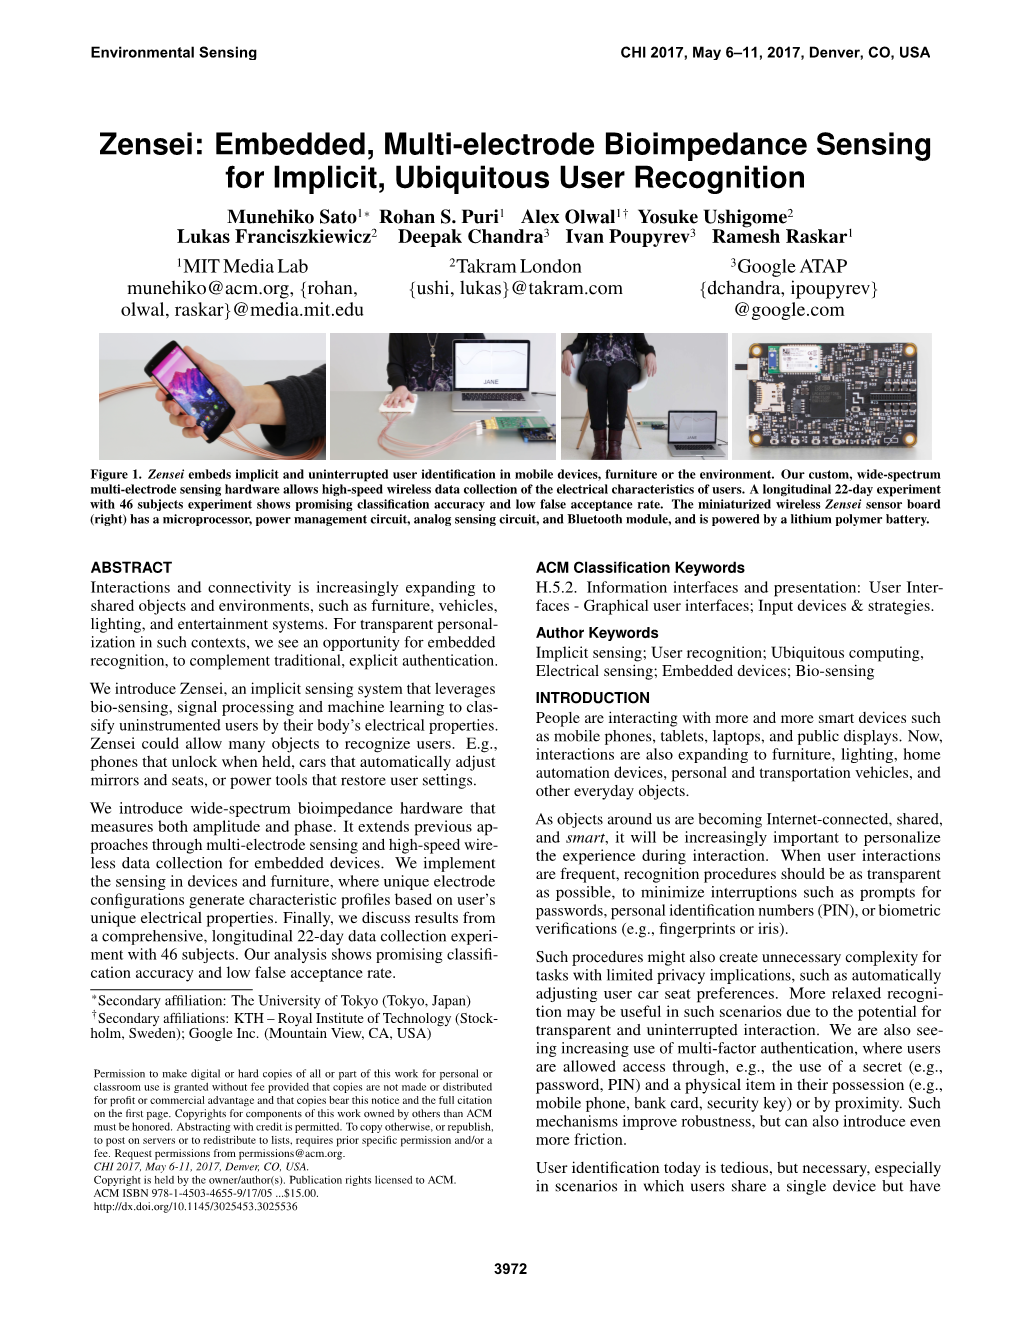 Zensei: Embedded, Multi-Electrode Bioimpedance Sensing for Implicit, Ubiquitous User Recognition